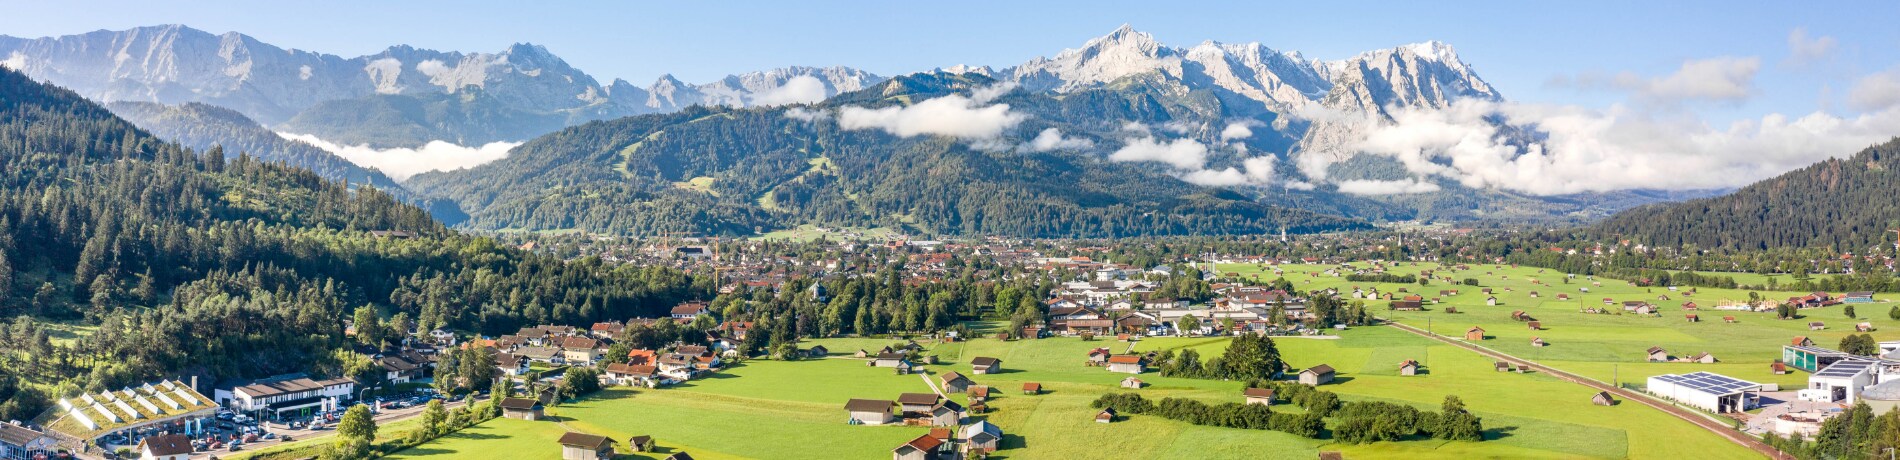 Villaggio di Garmisch partenkirchen, Baviera, Germania | Eden viaggi